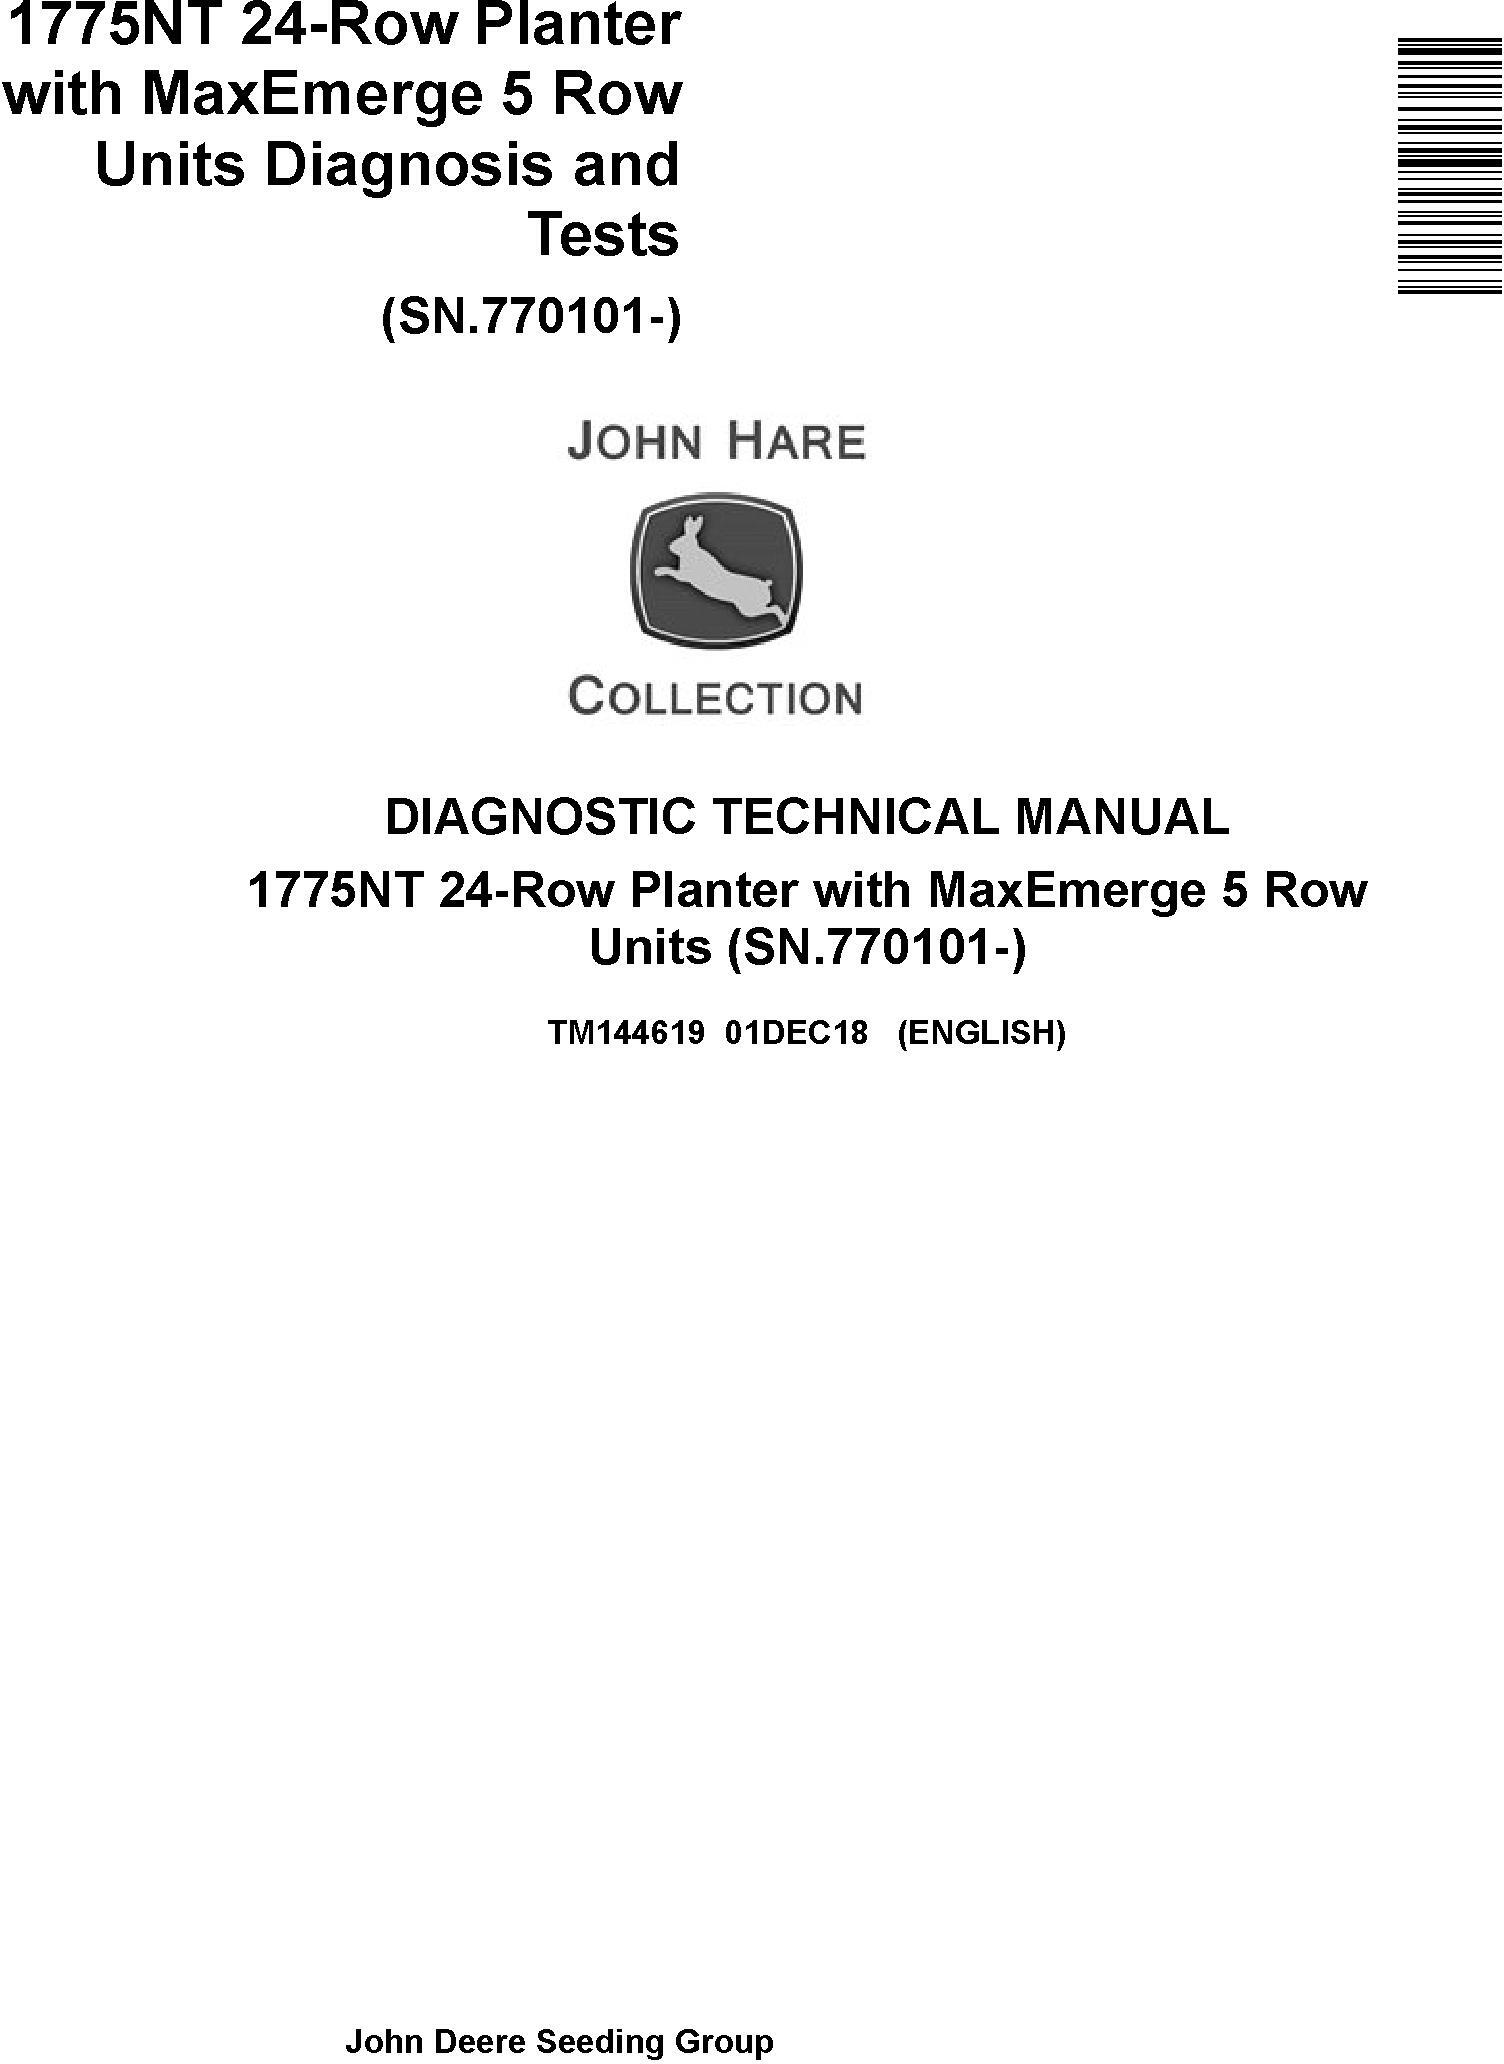 John Deere 1775NT 24-Row Planter Diagnostic Test Manual TM144619